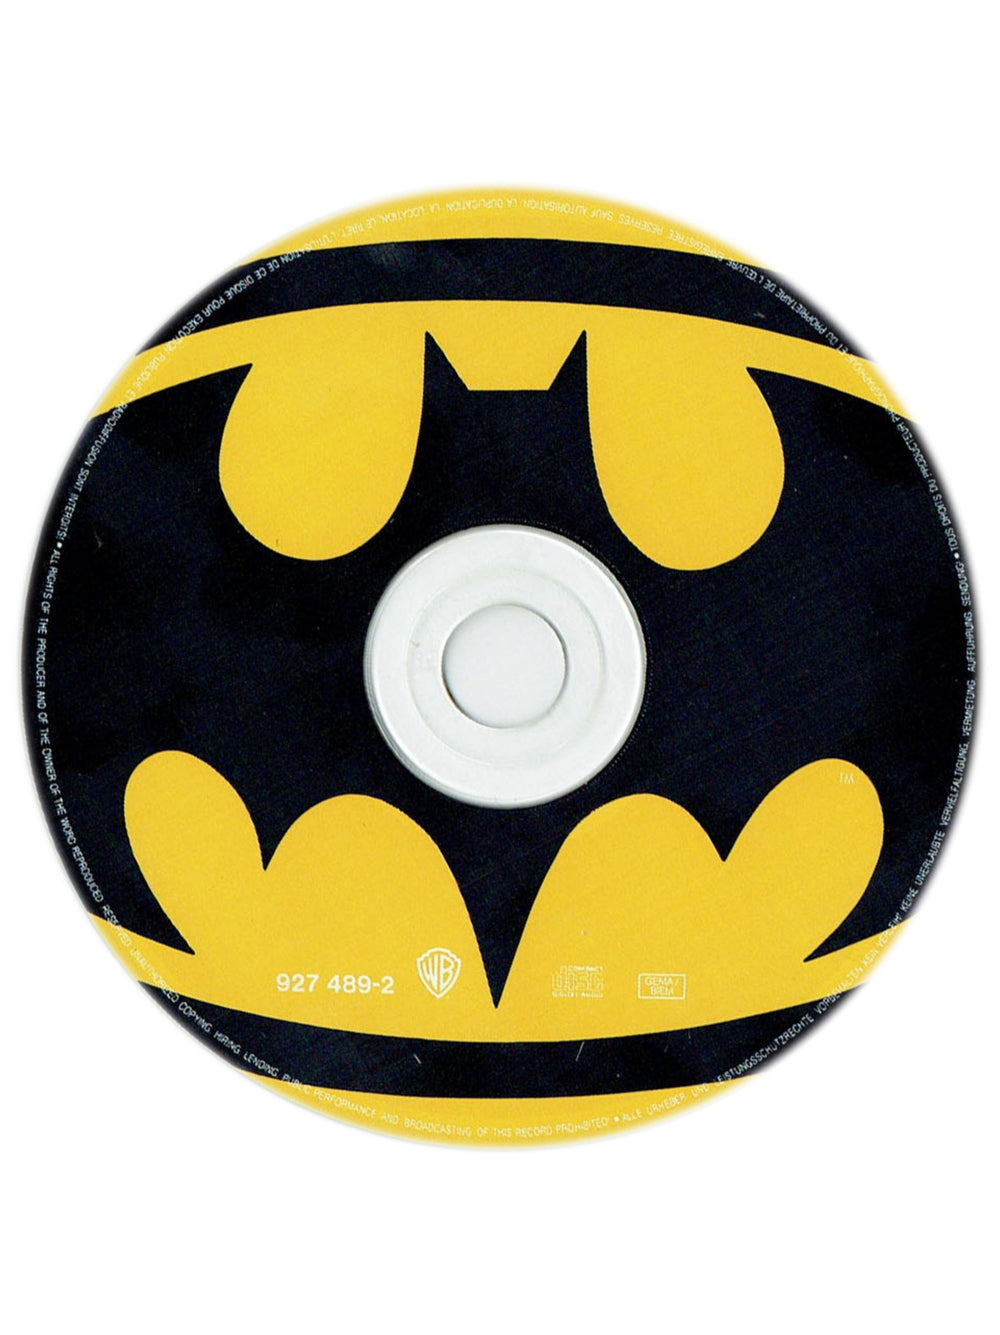 Prince – Batman™ (Motion Picture Soundtrack) CD Album Picture Disc EU Preloved: 1989